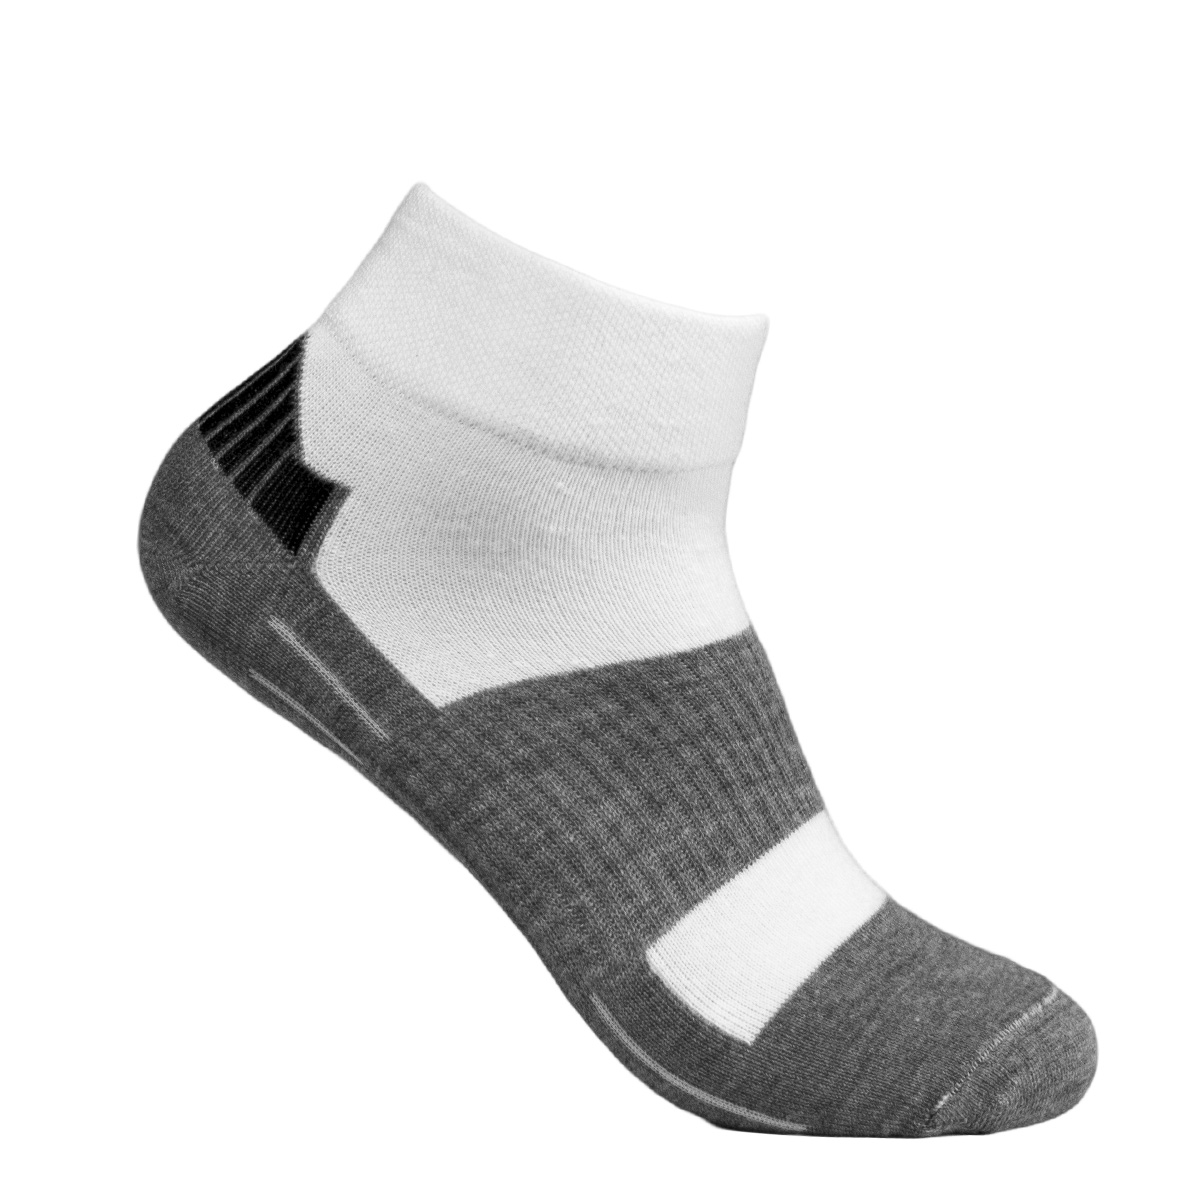 Best Sock for Exercising and Running - Thin & Light, Keeps Feet Dry (3 ...